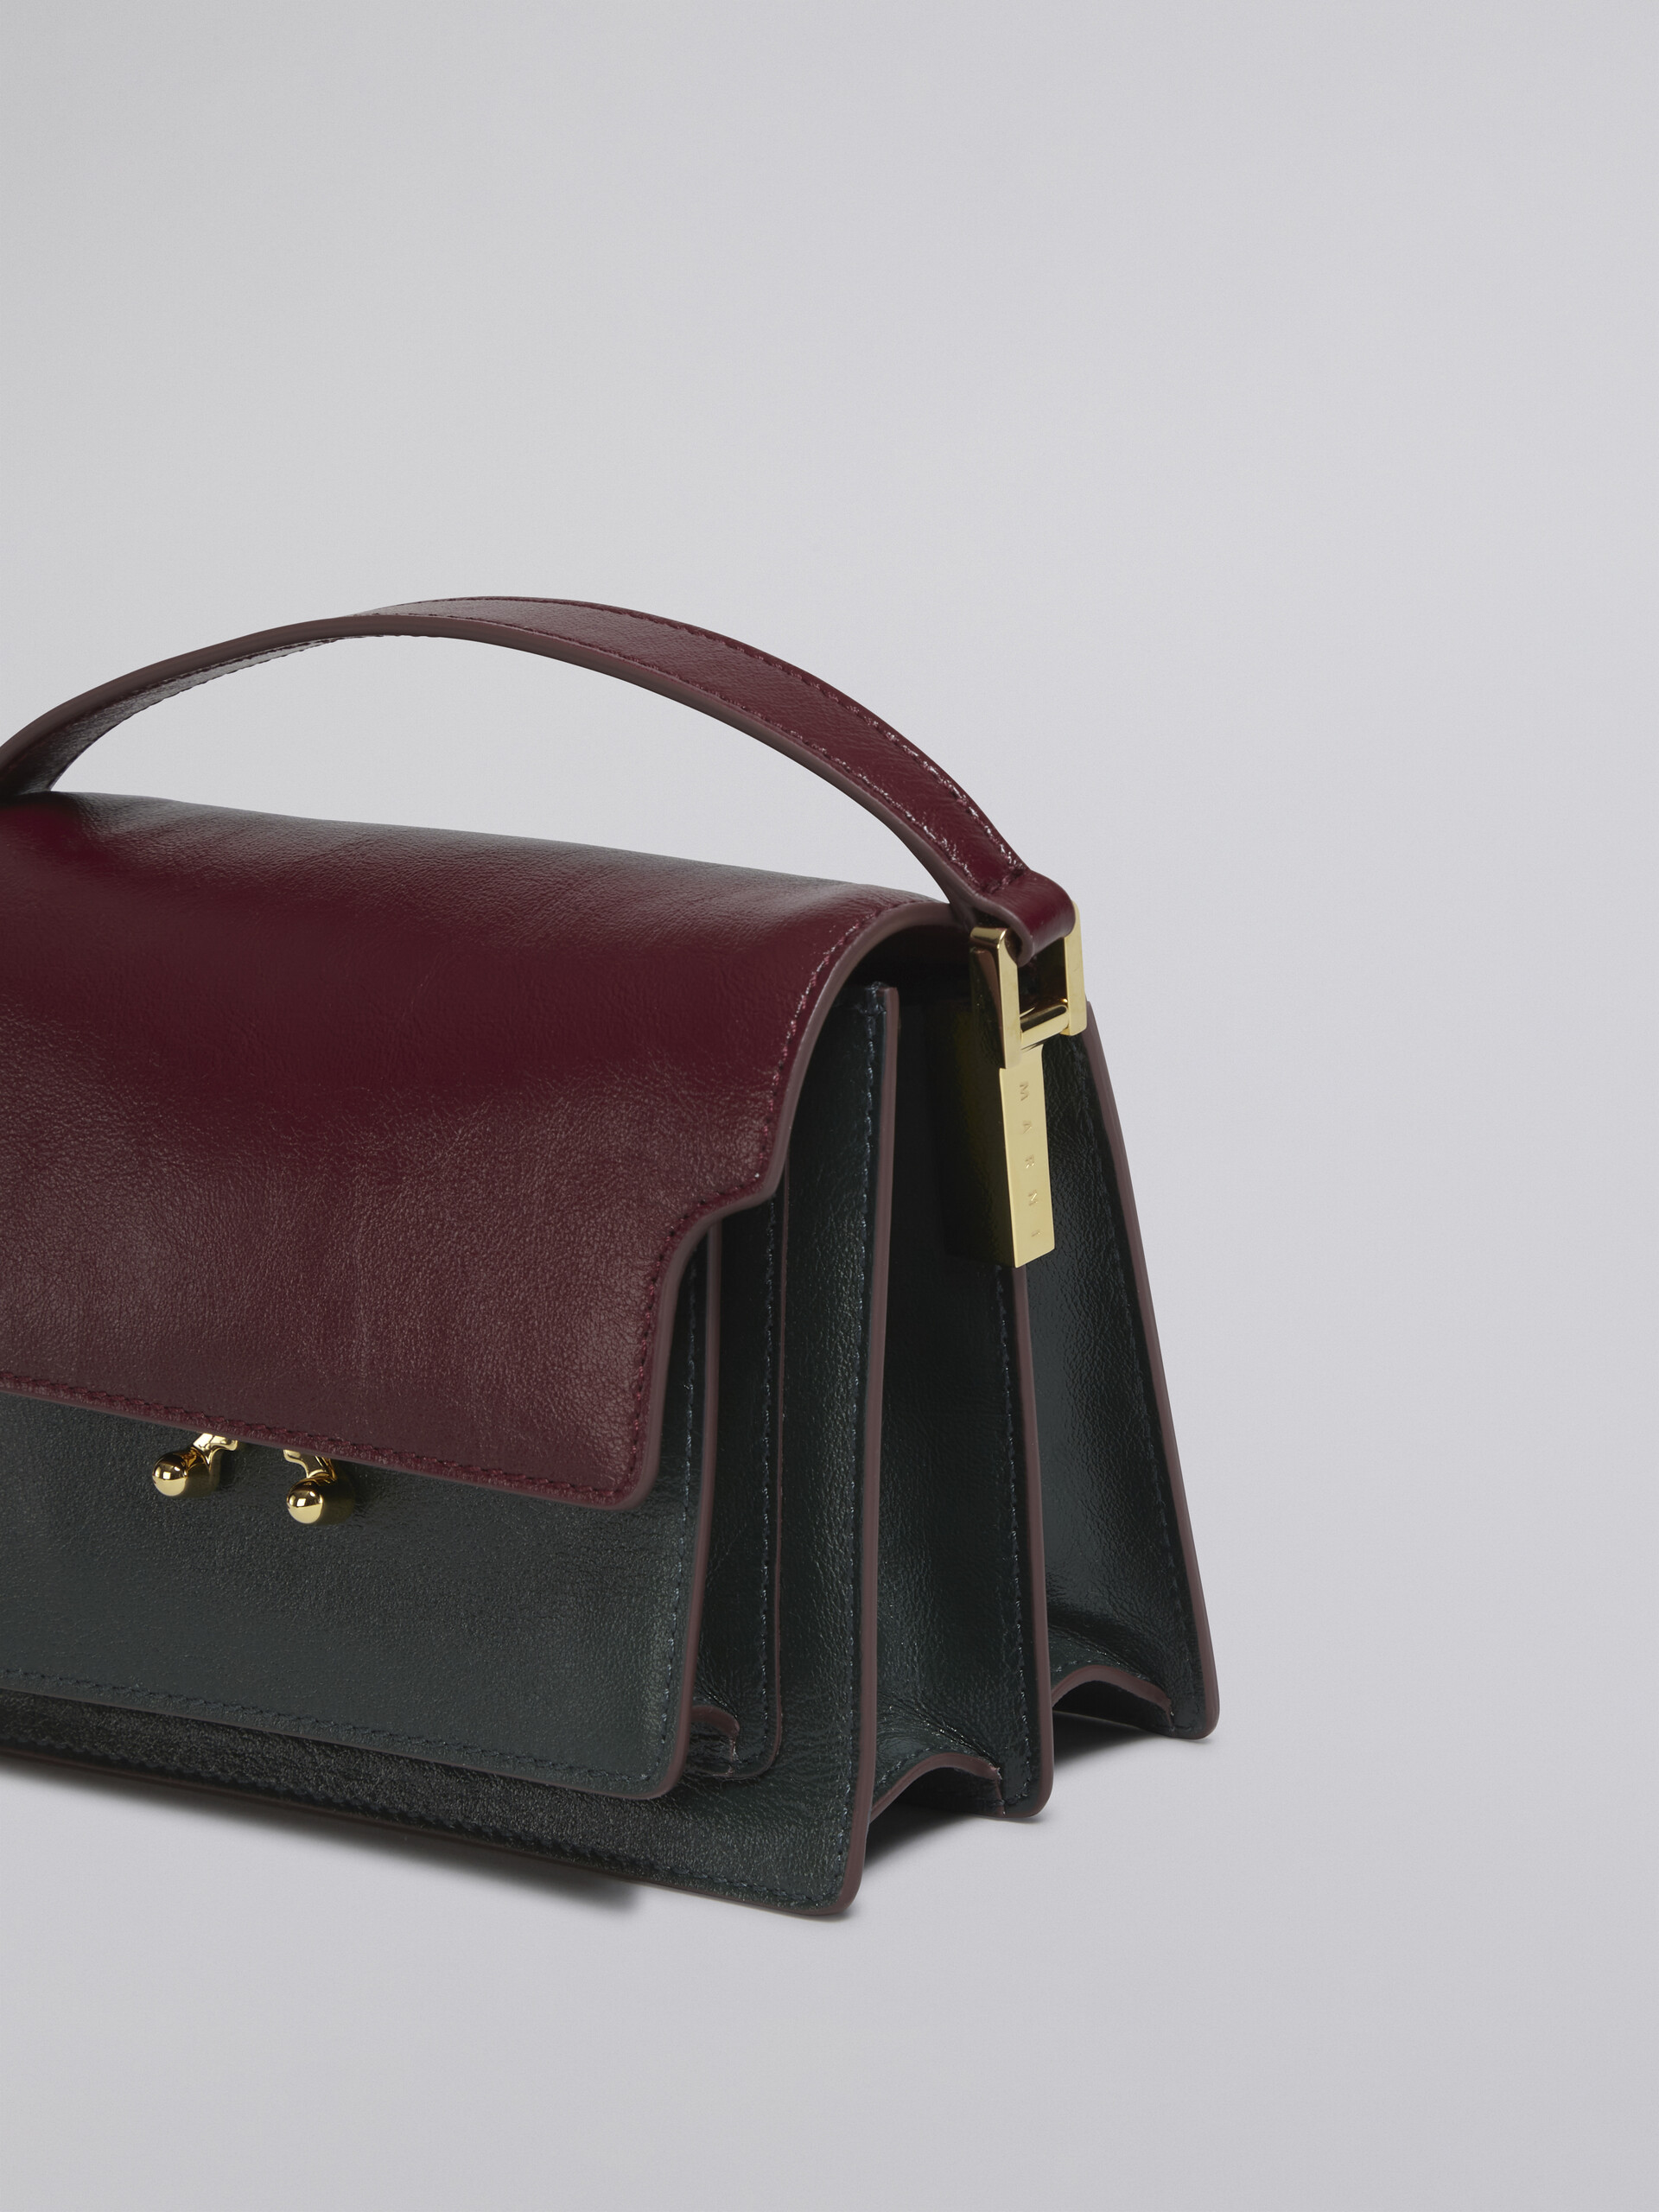 TRUNK SOFT mini bag in green and burgundy leather - Shoulder Bag - Image 4